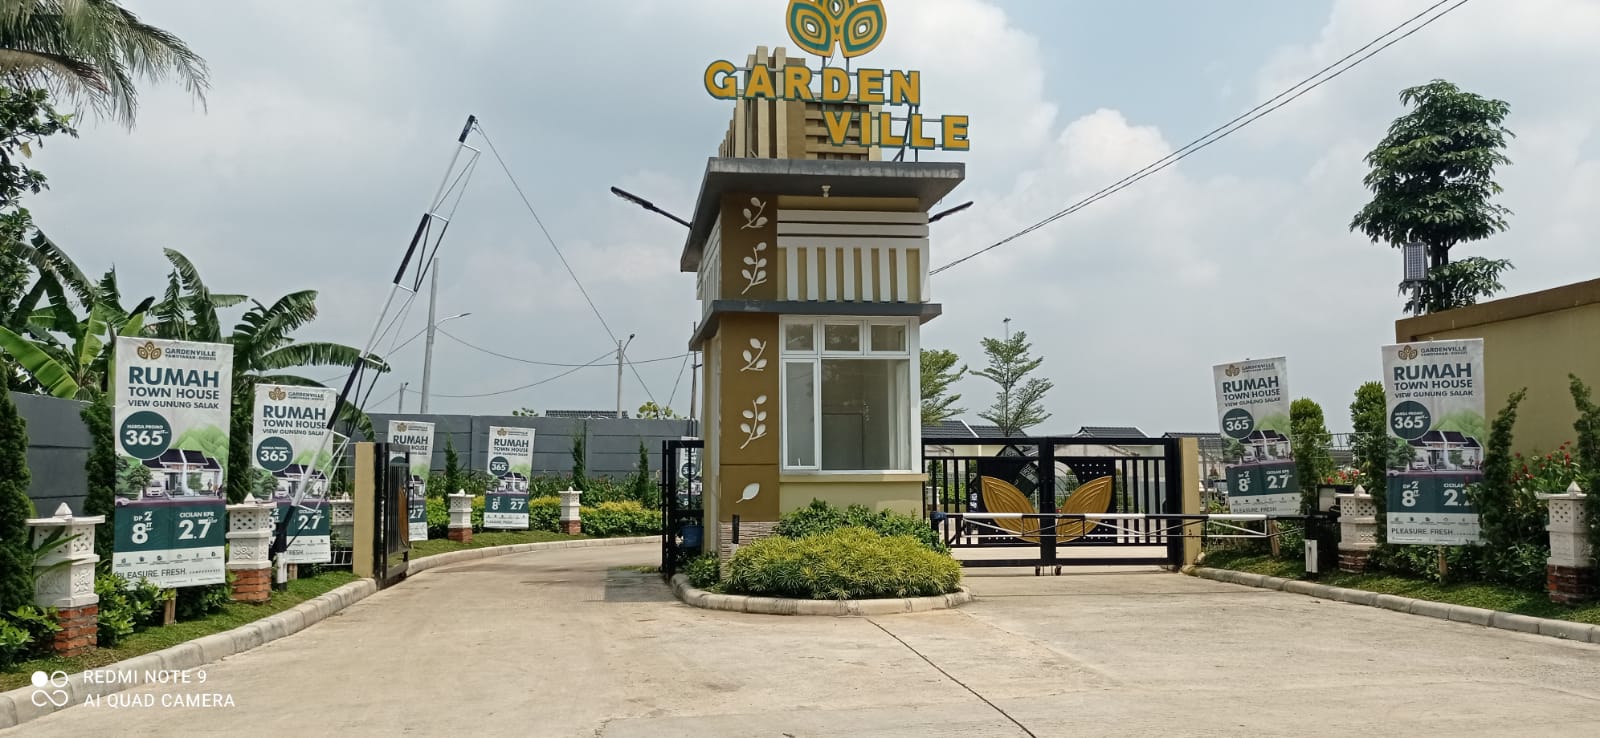 Gallery Garden Ville – Bukit Cimanggu City (3)